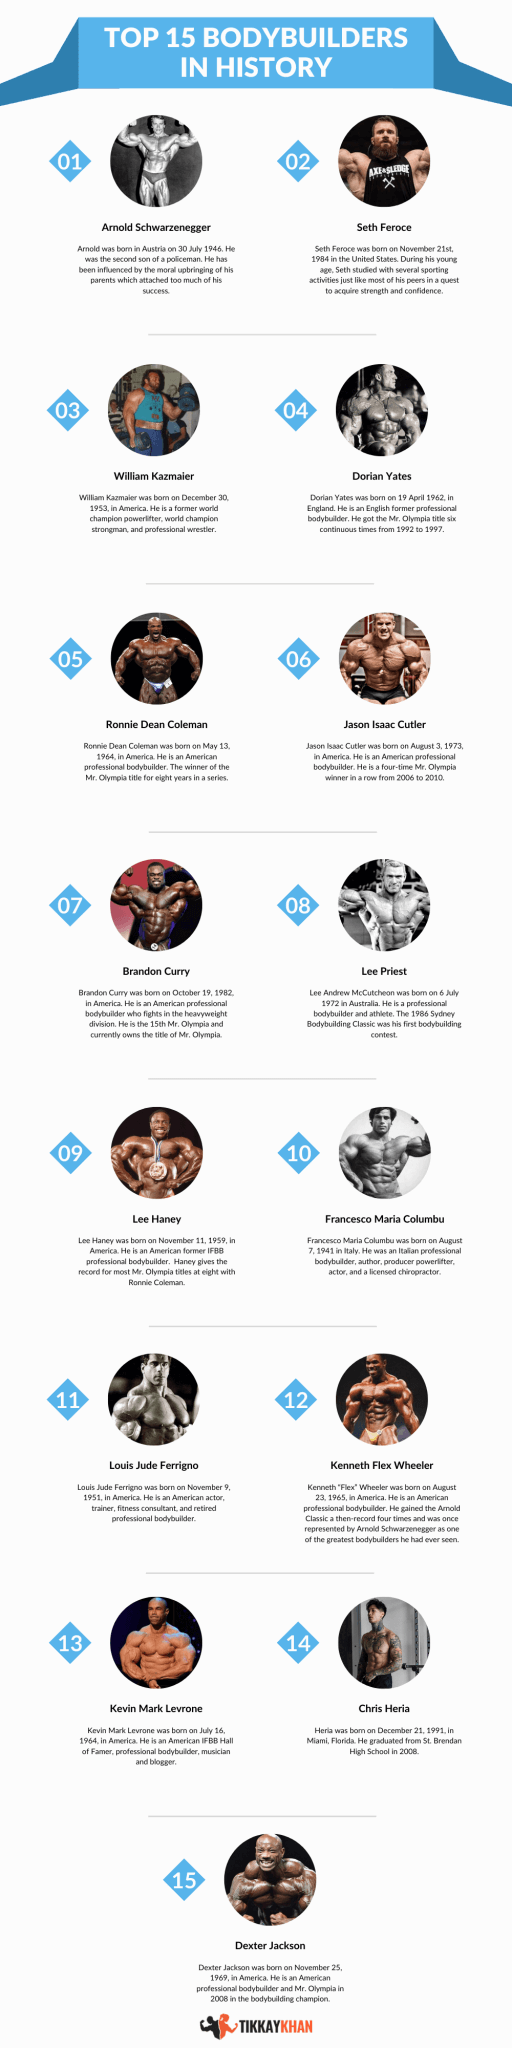 Top 15 Bodybuilders in History - Tikkay Khan